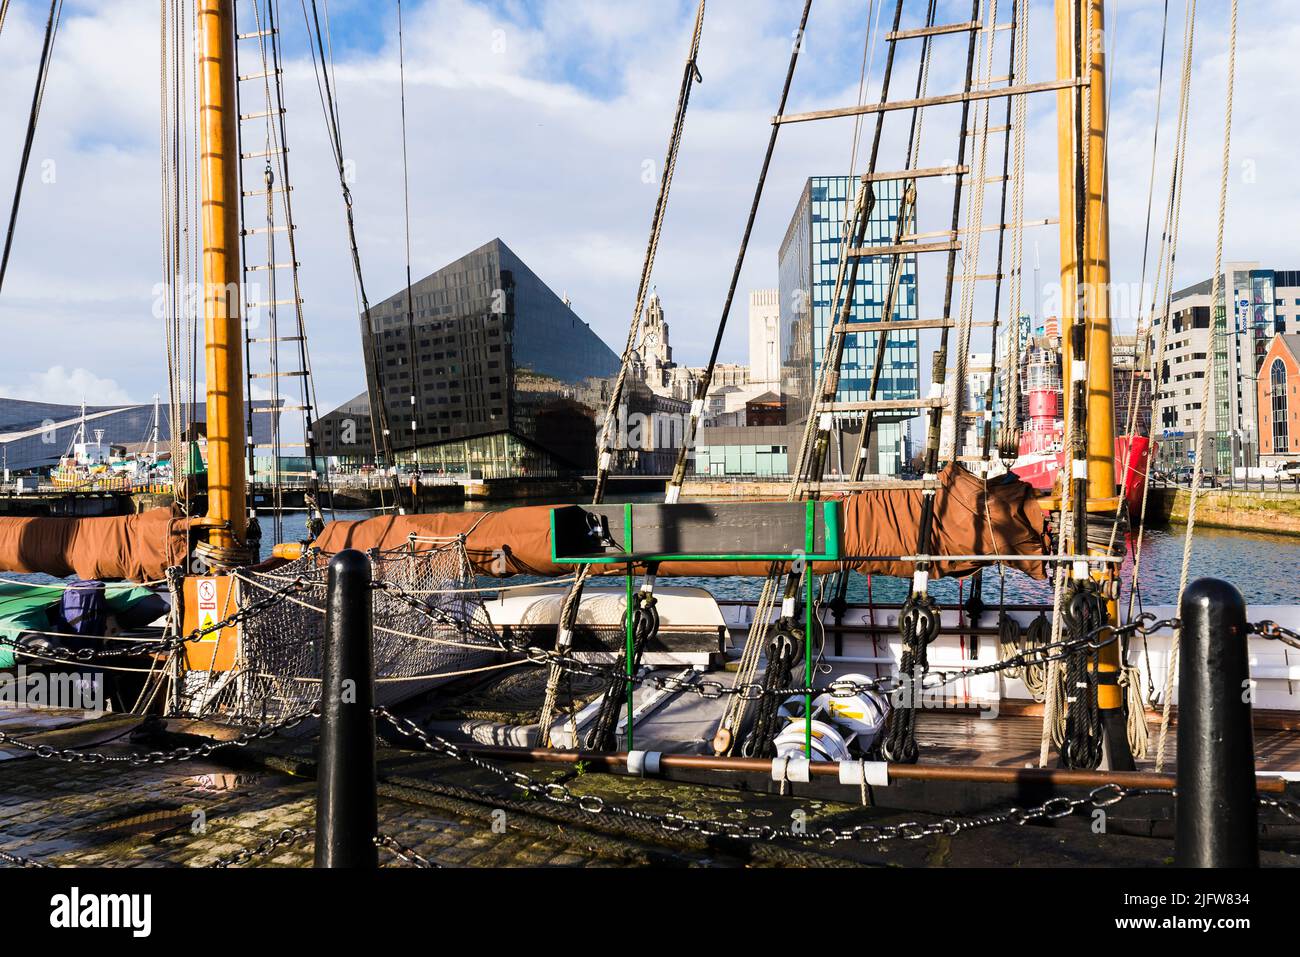 A classic ship set against the Liverpool cityscape at the Liverpool Docks. Liverpool, Merseyside, Lancashire, England, United Kingdom Stock Photo